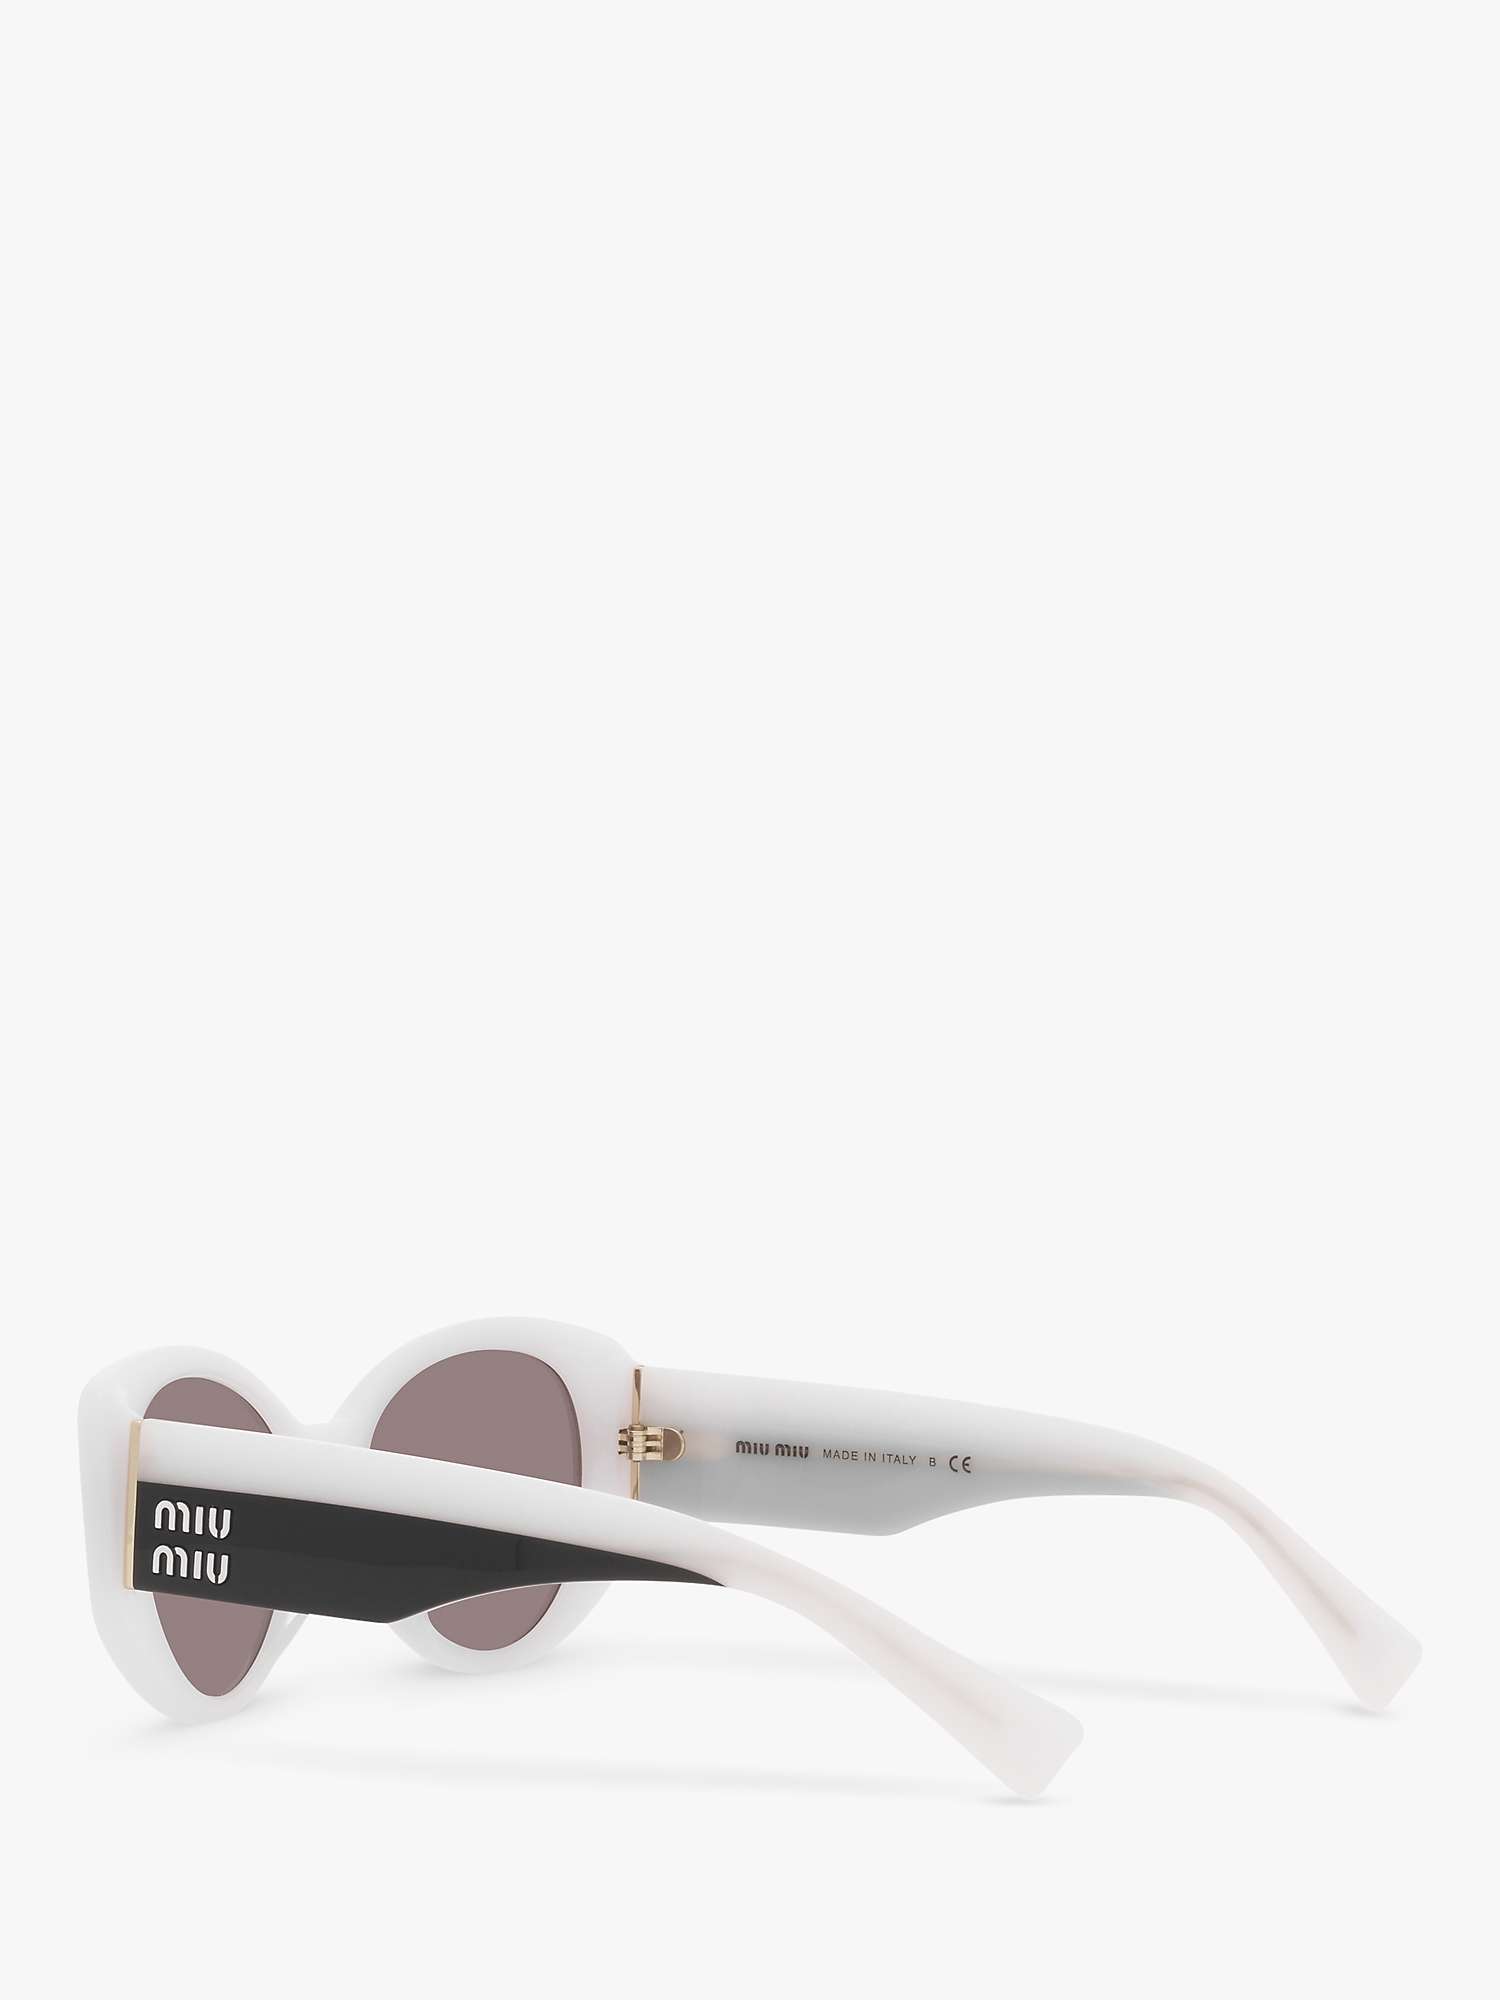 Buy Miu Miu MU 03WS Women's Irregular Sunglasses, White/Grey Online at johnlewis.com